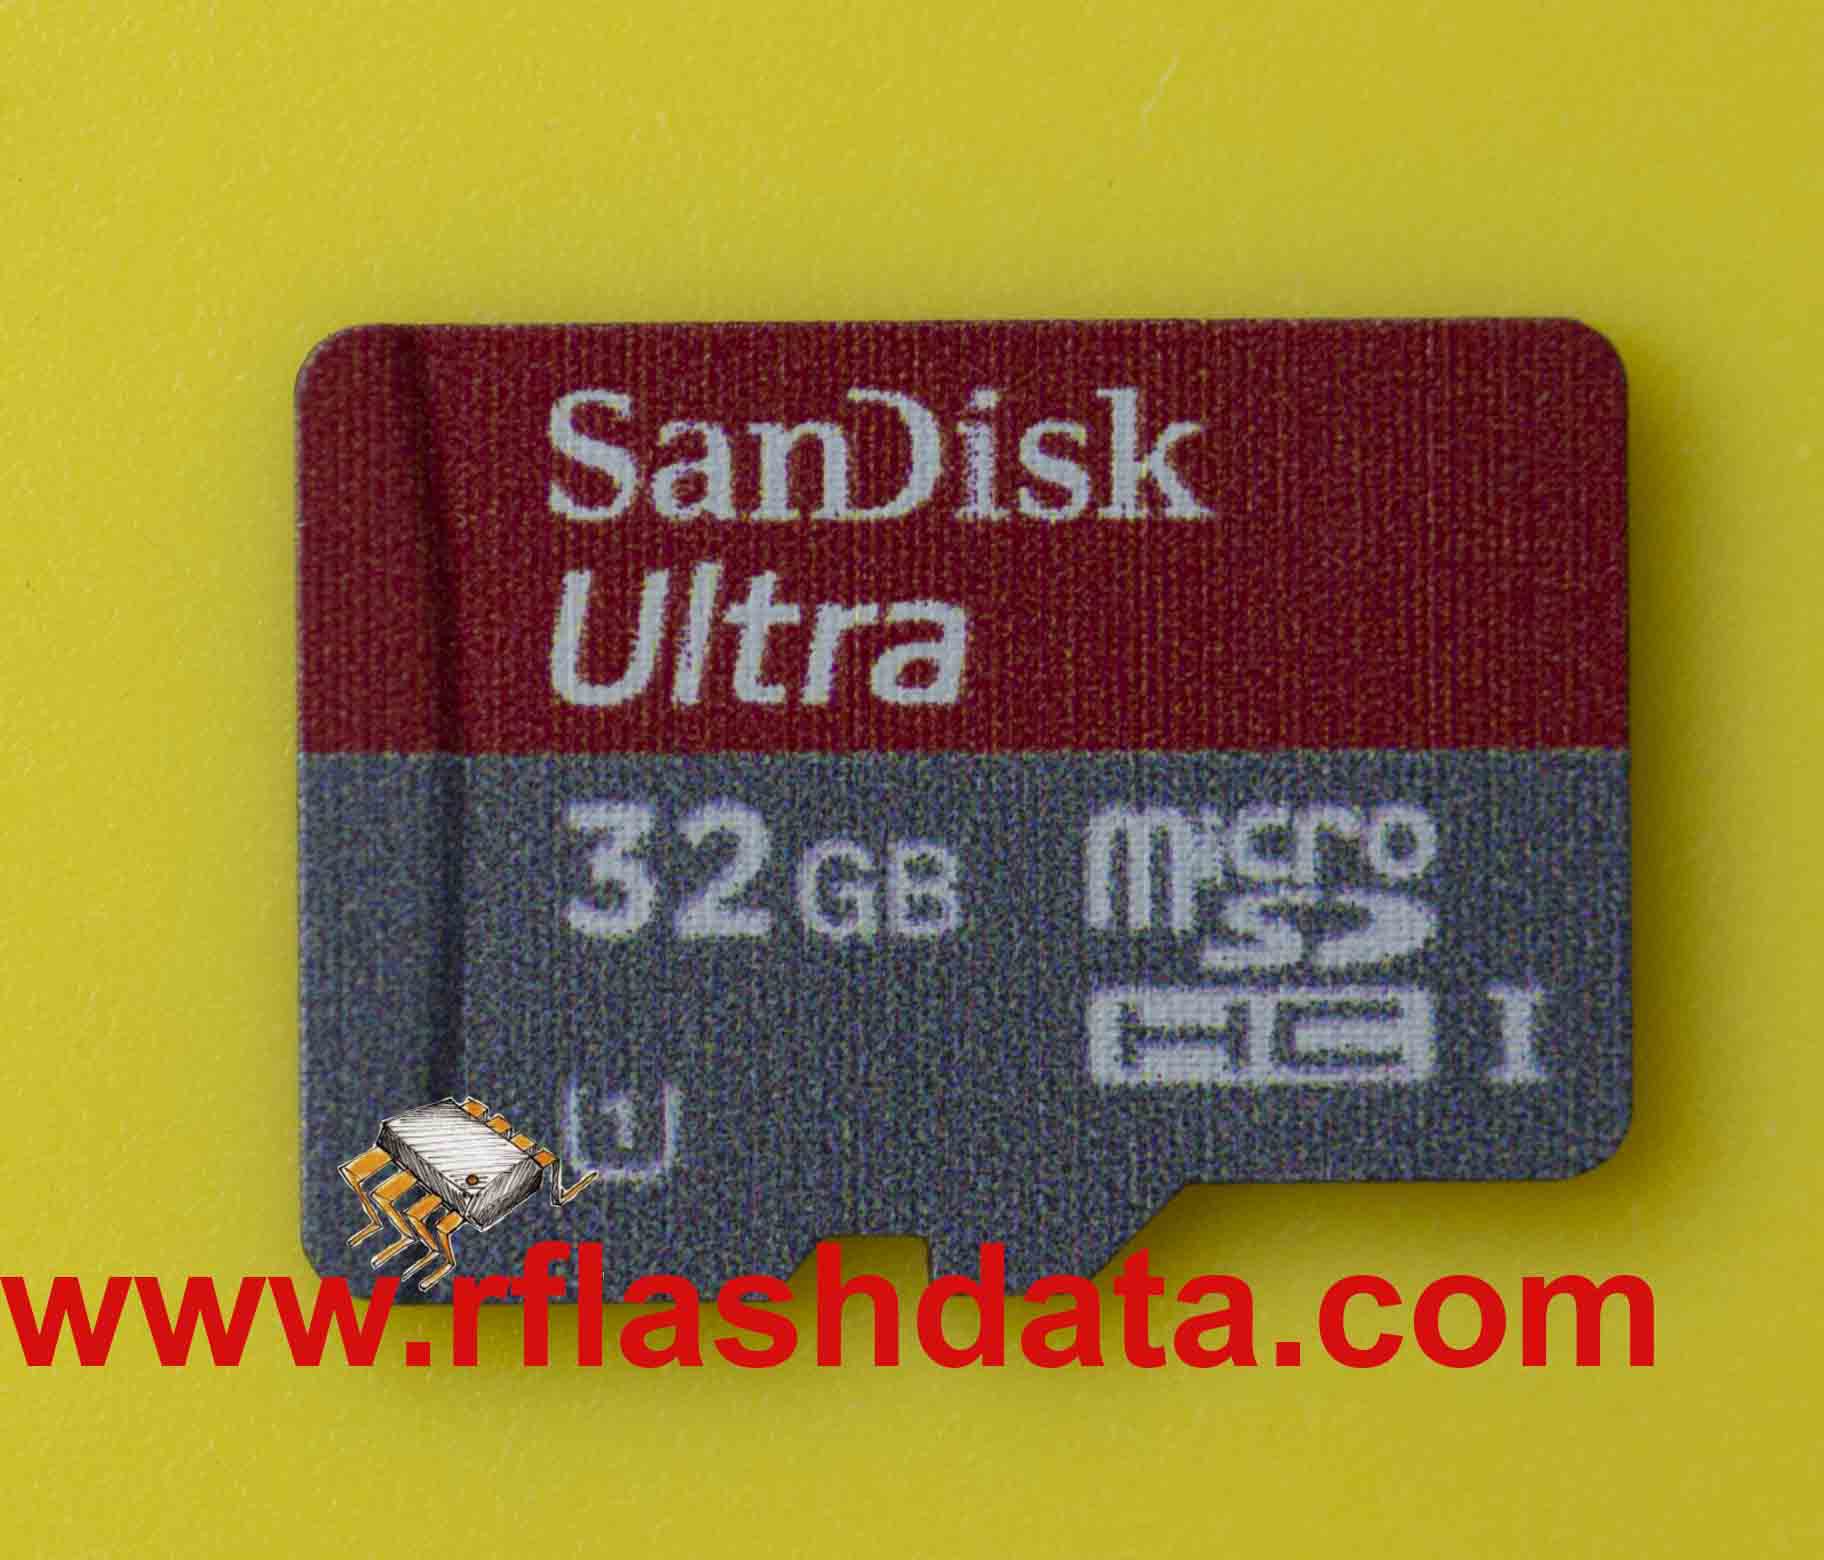 Sandisk microSD data recovery